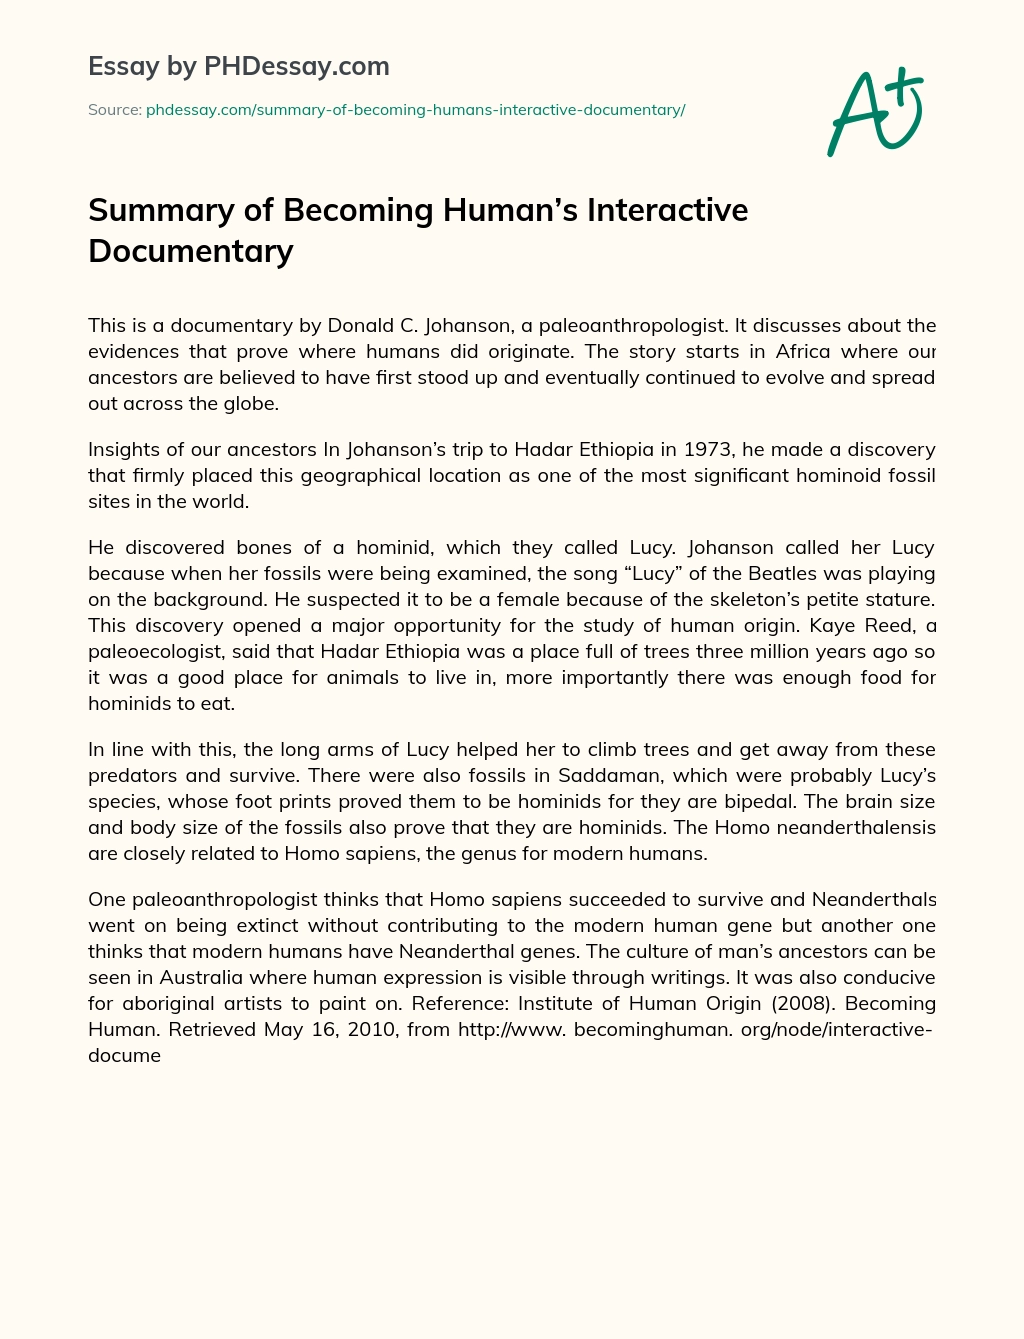 Summary of Becoming Human’s Interactive Documentary essay